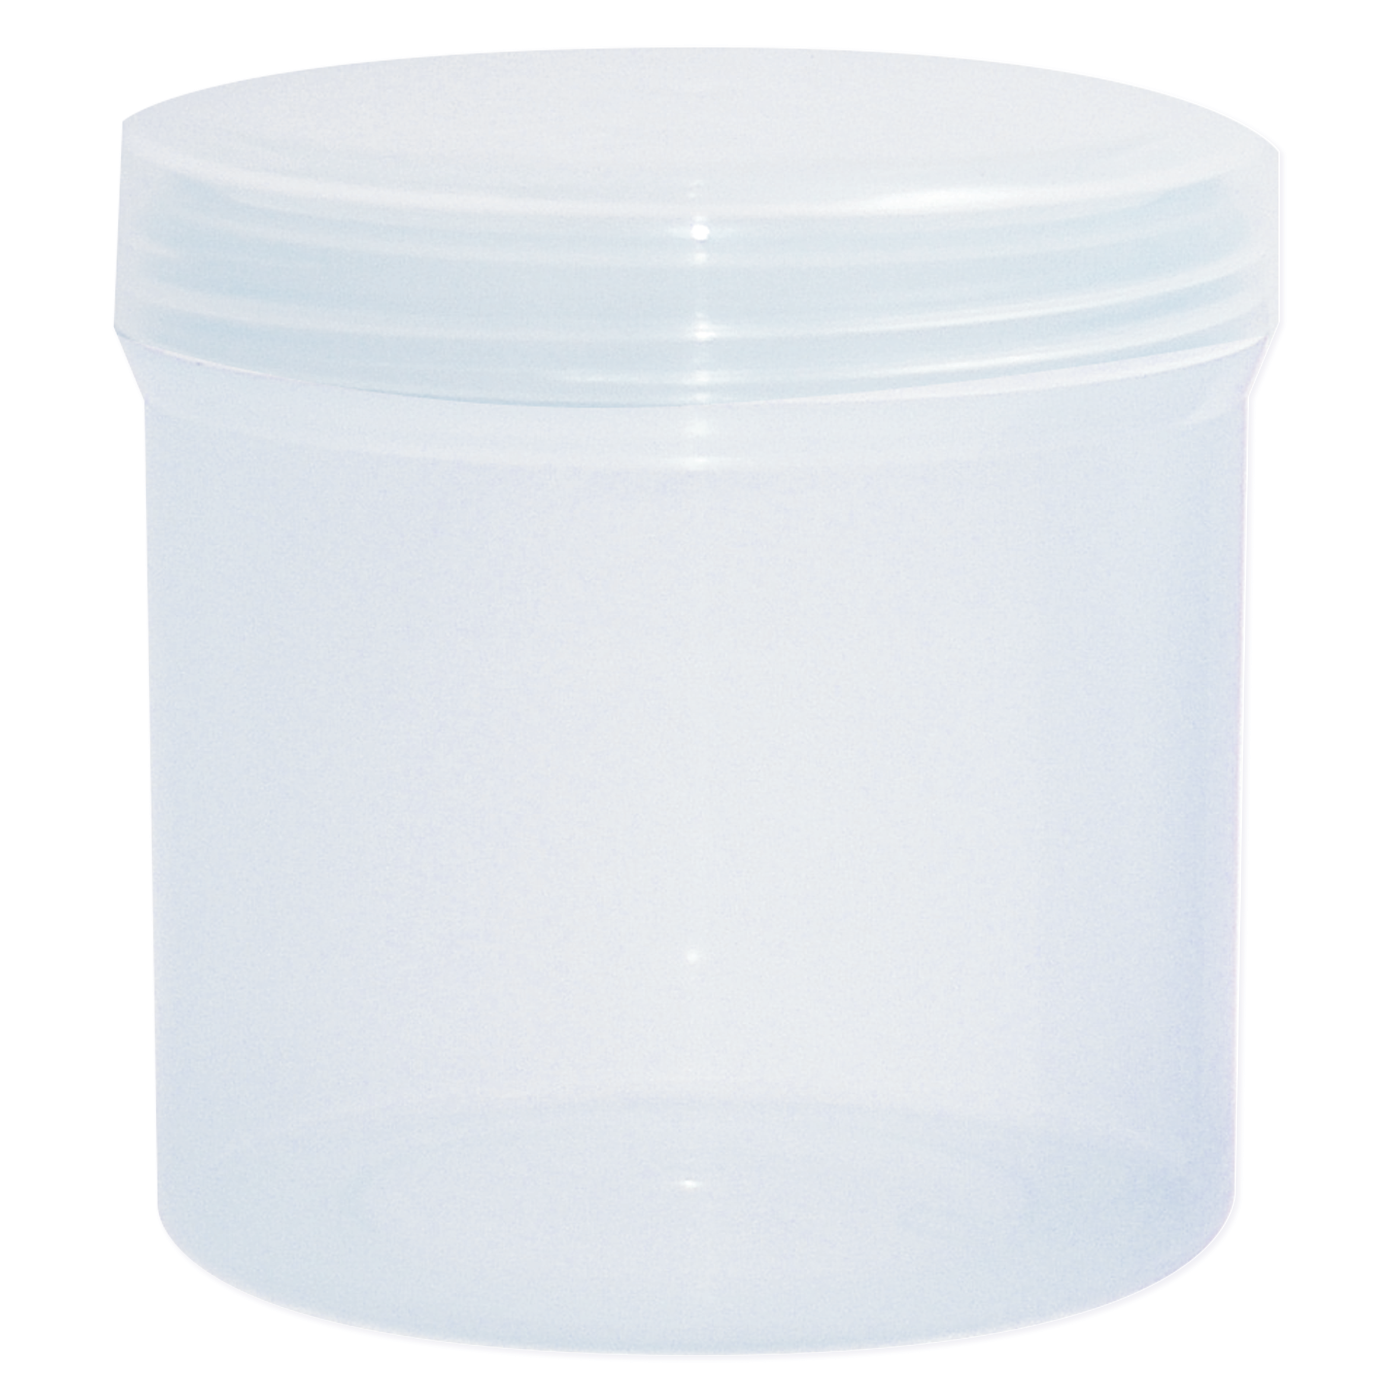 Translucent Spa Treatment Jar, Large, 250 mL